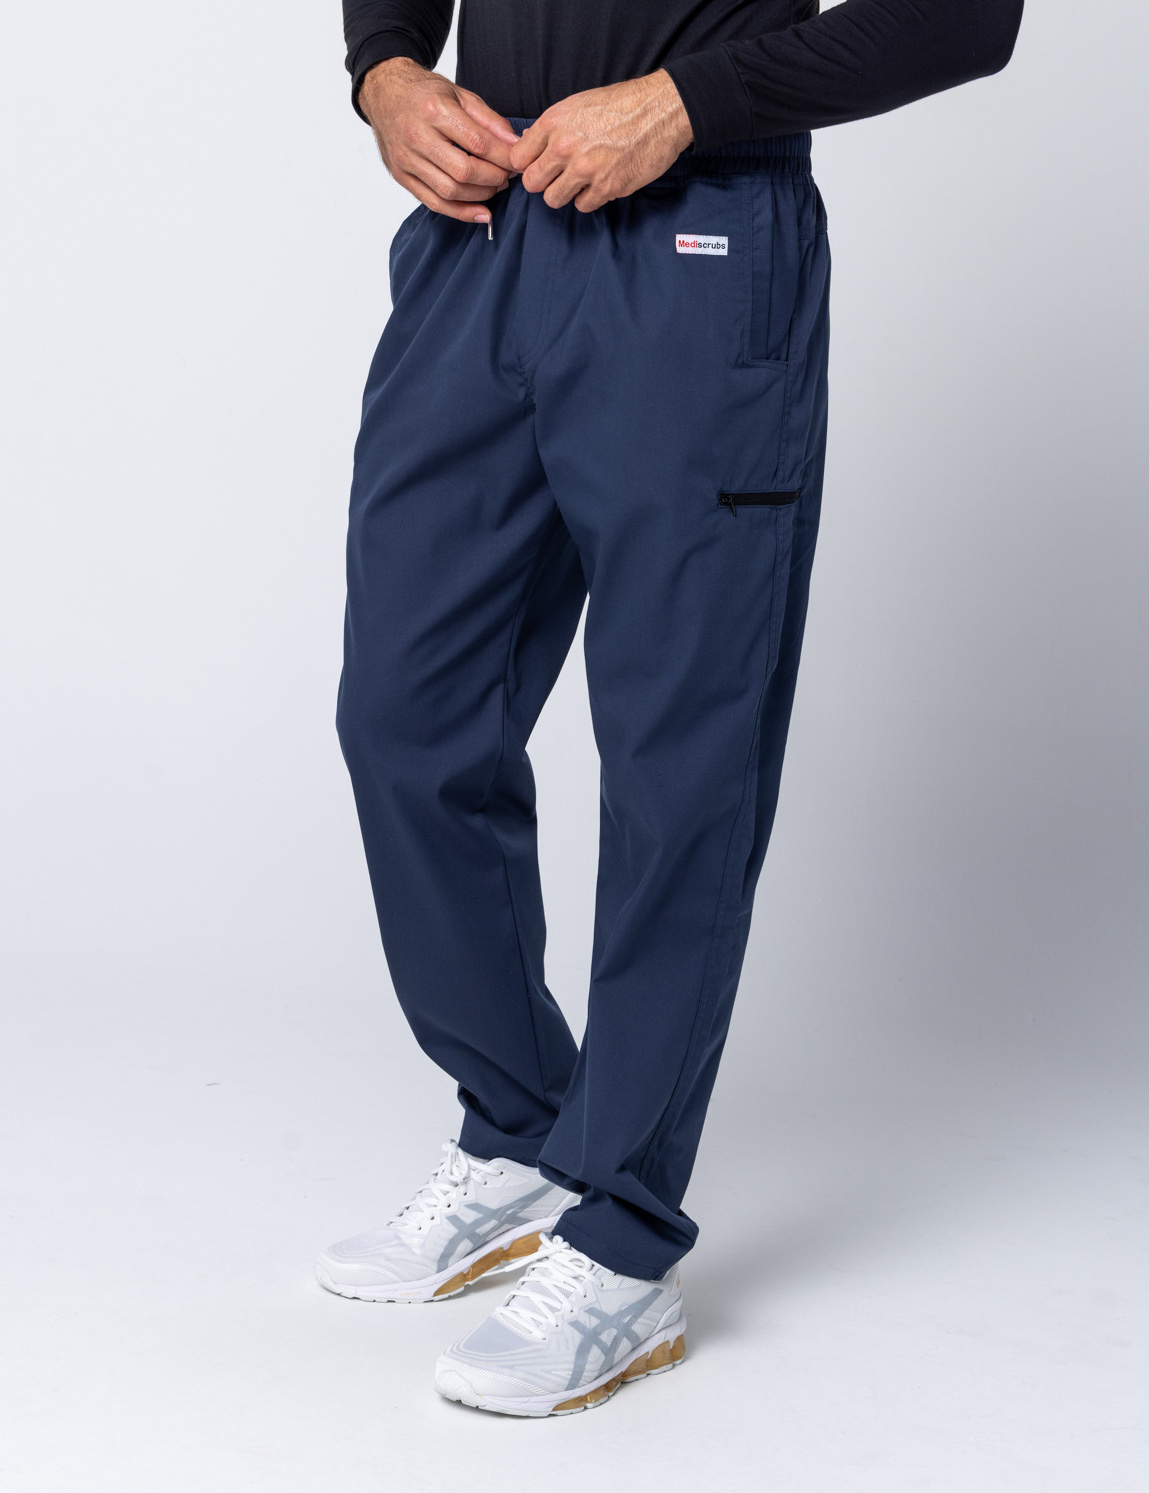 Men's Utility Pants - Navy - 2X Large